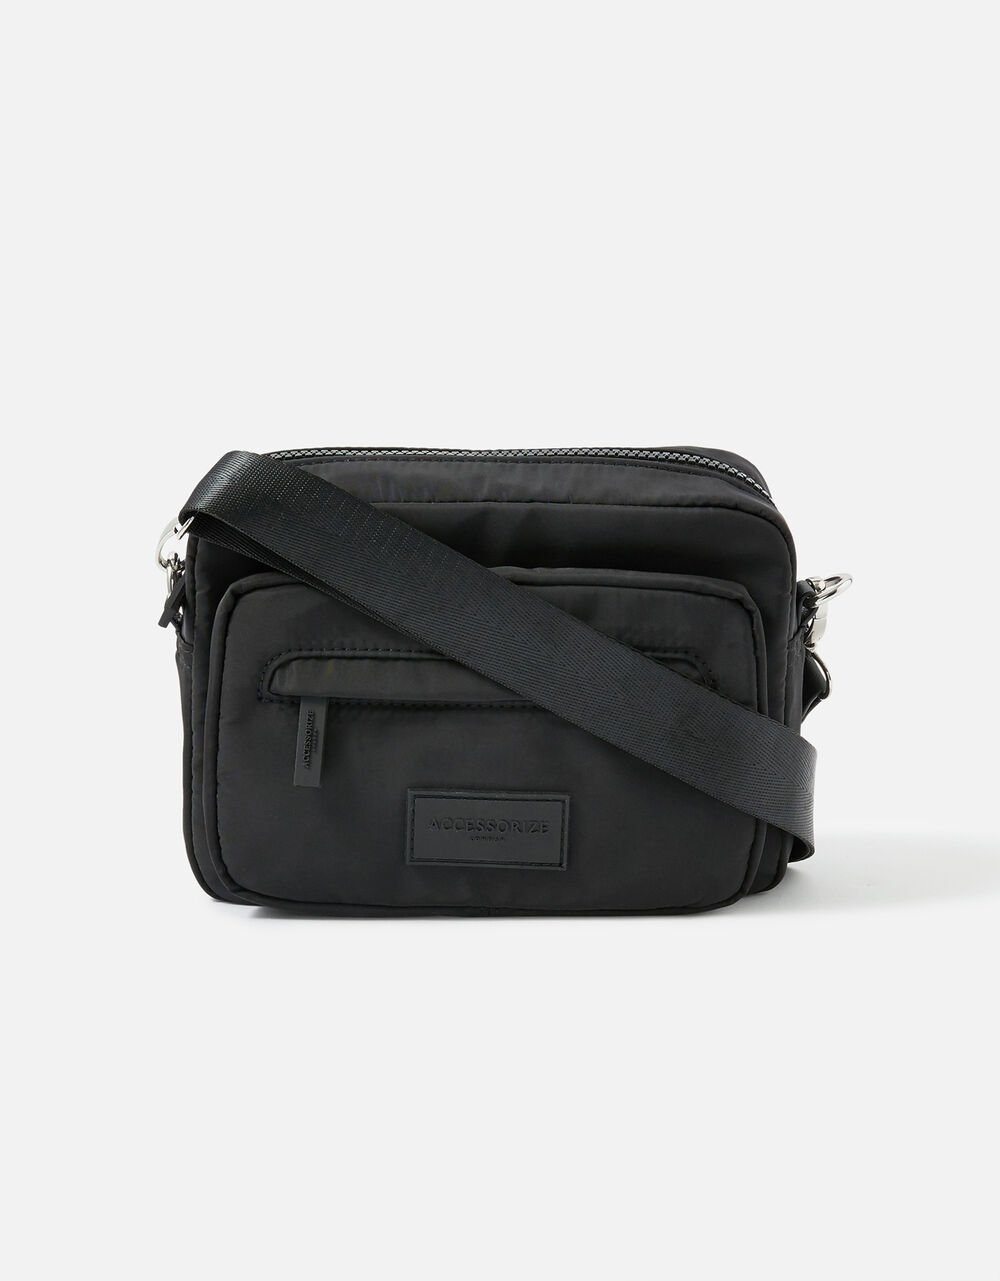 Cali Camera Cross-Body Bag | Cross-body bags | Accessorize UK